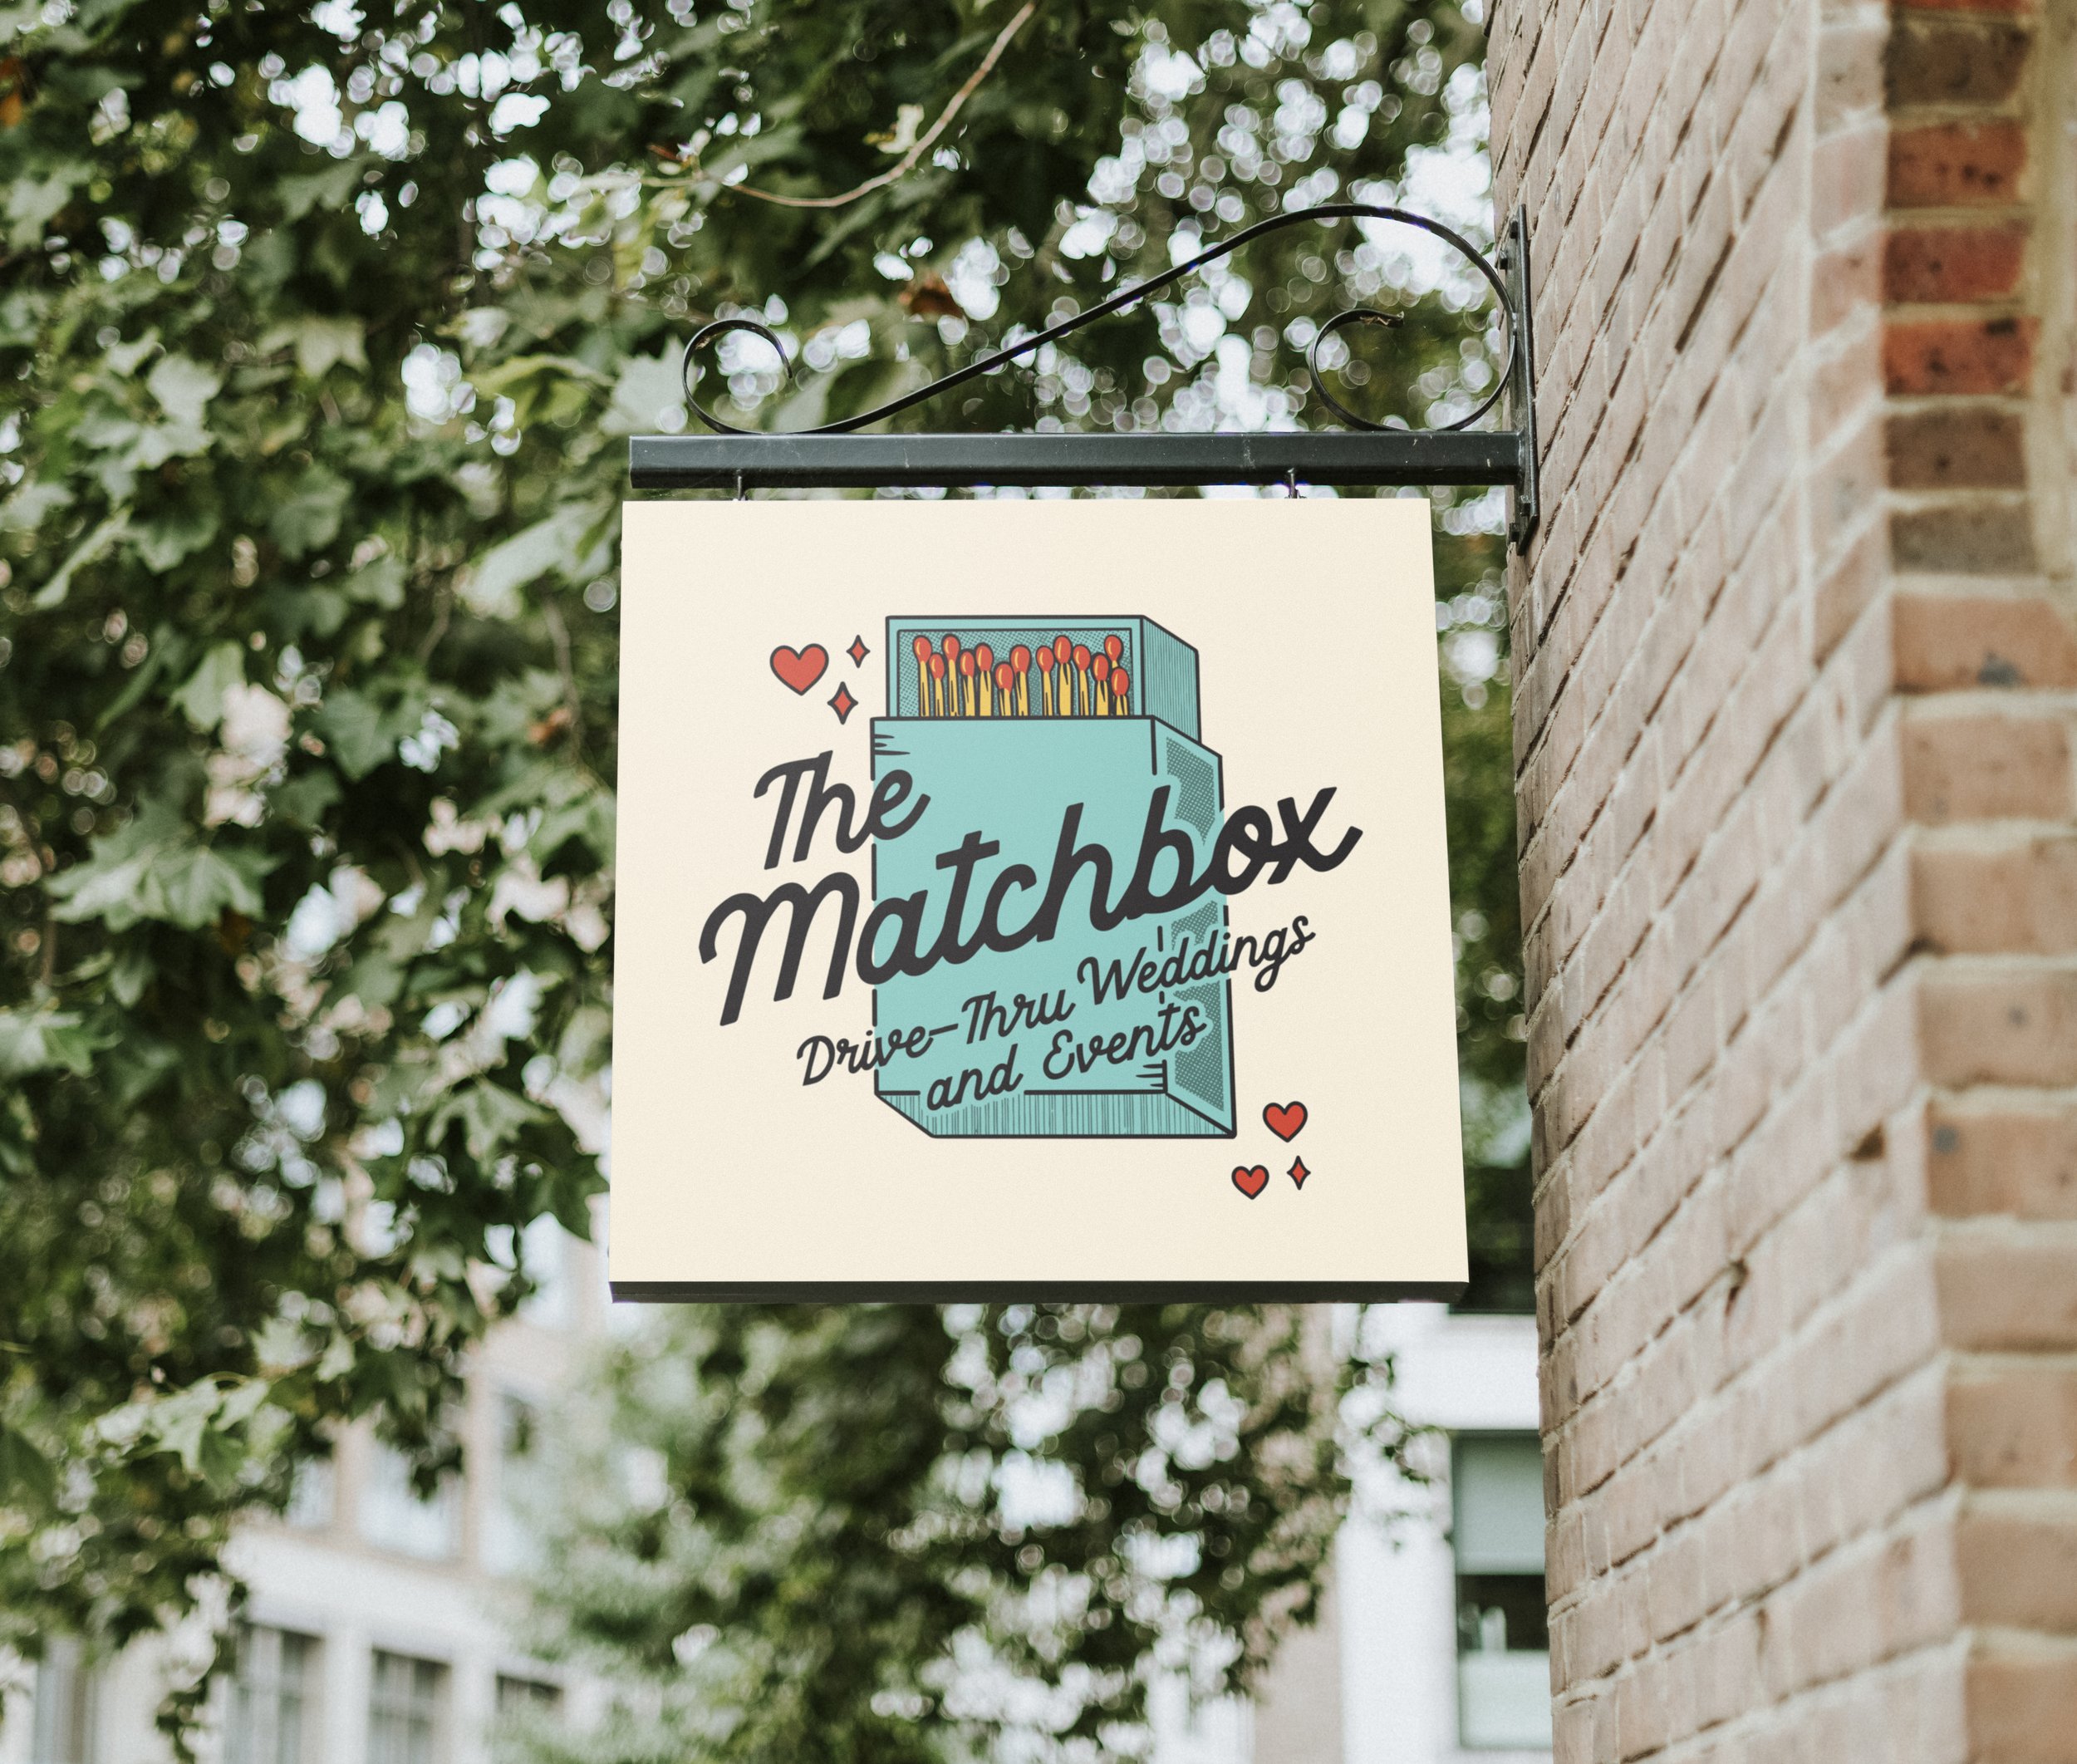 MatchboxMockup.jpg